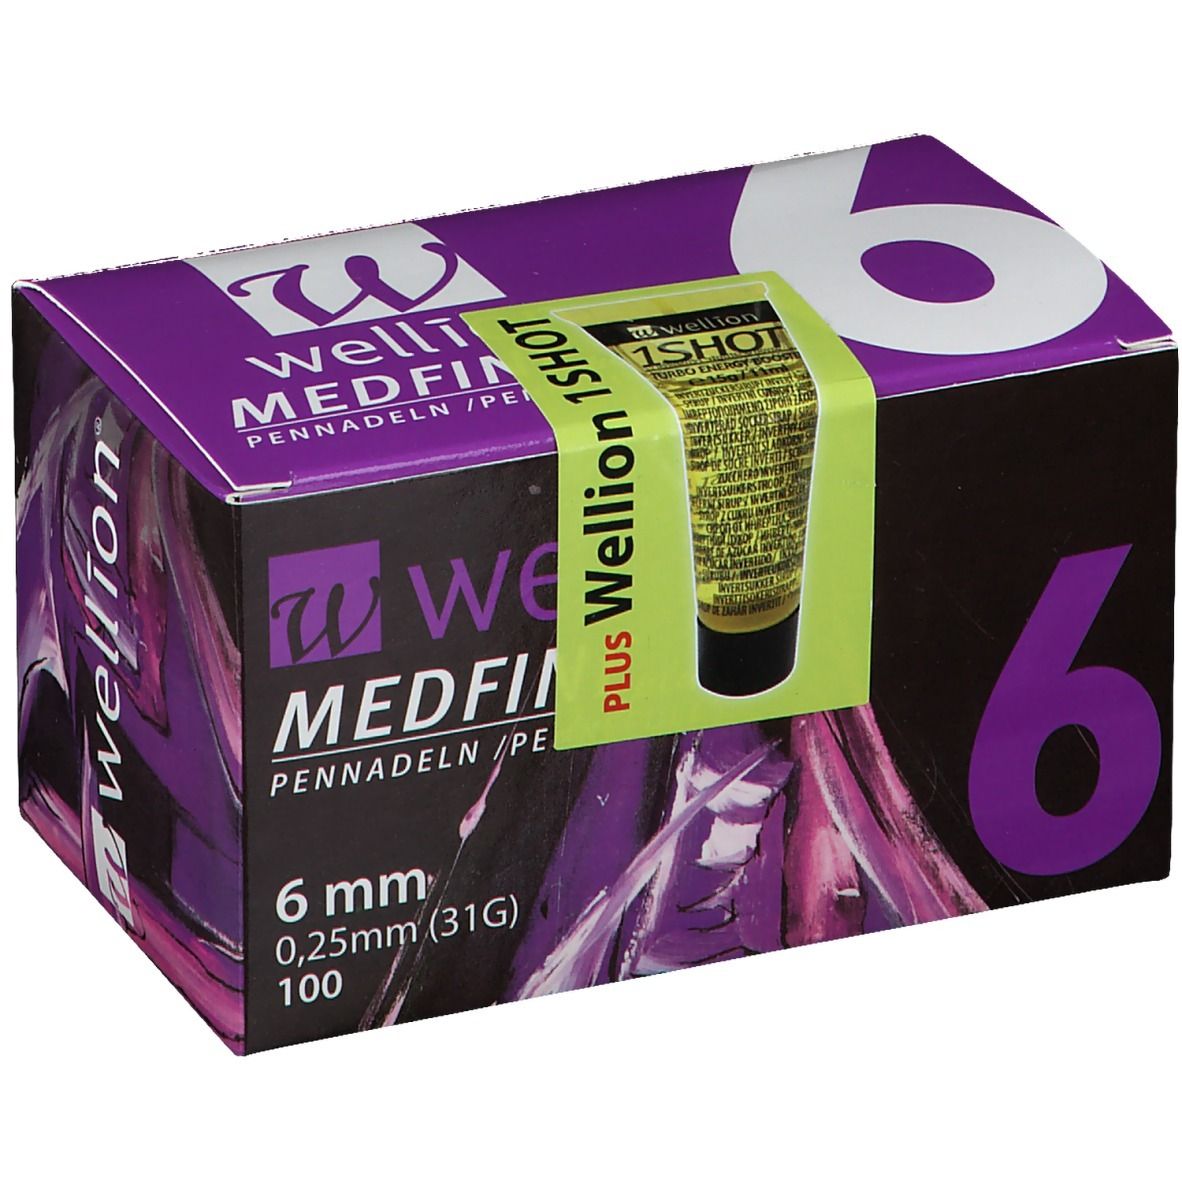 Image of Wellion Medfine Plus Pennadeln 6 mm